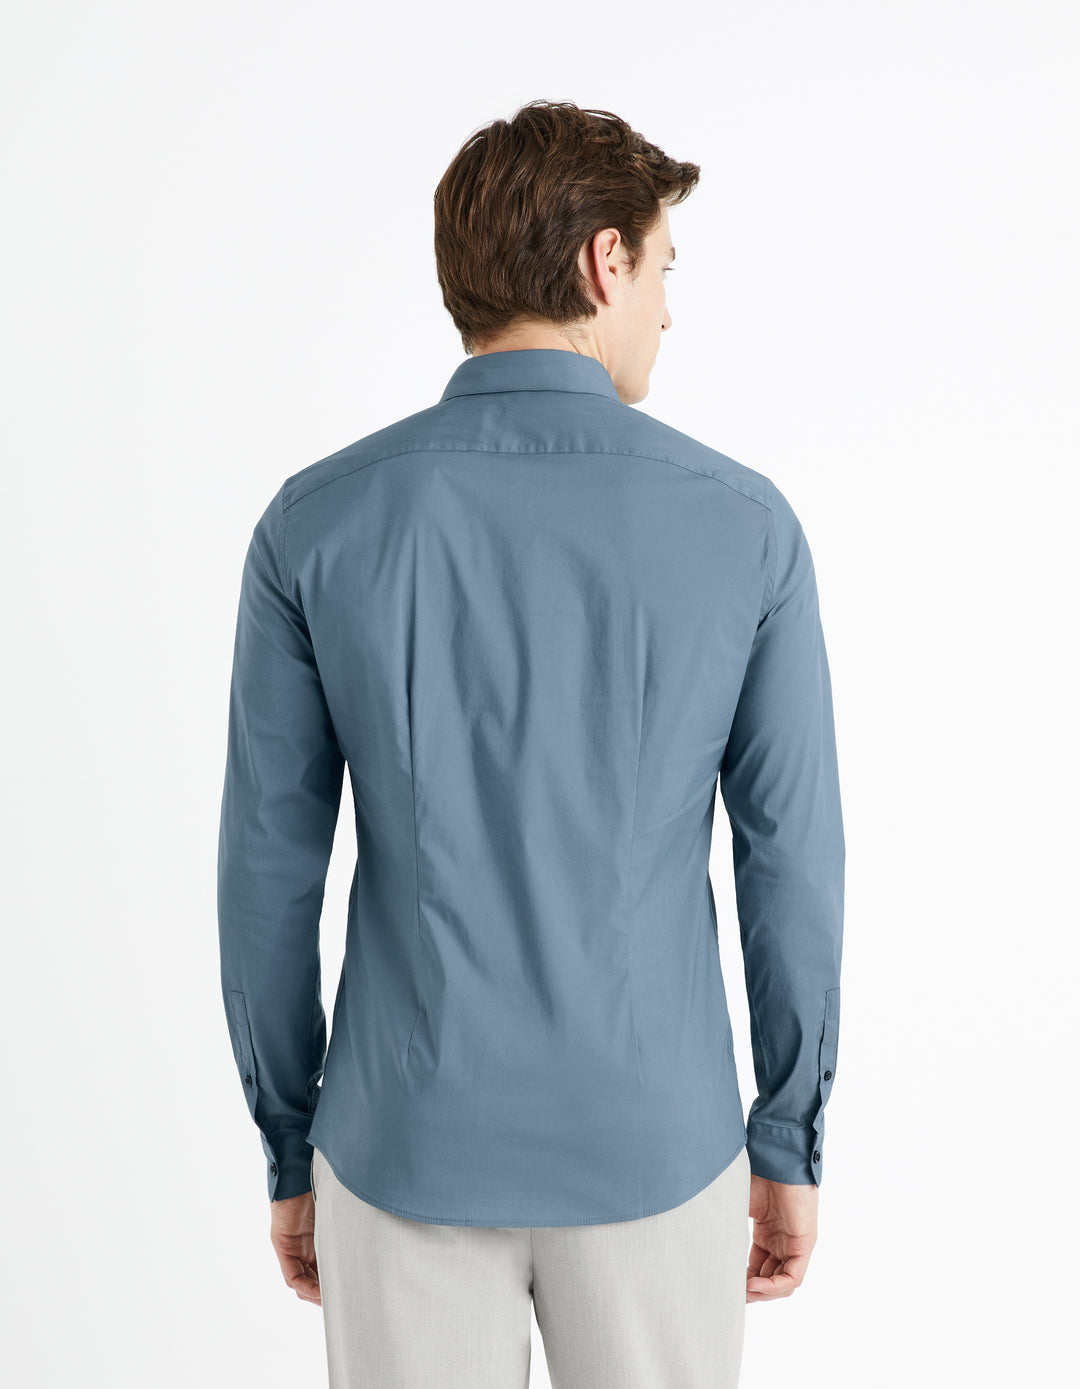 Men - Woven - Shirt - Long sleeves